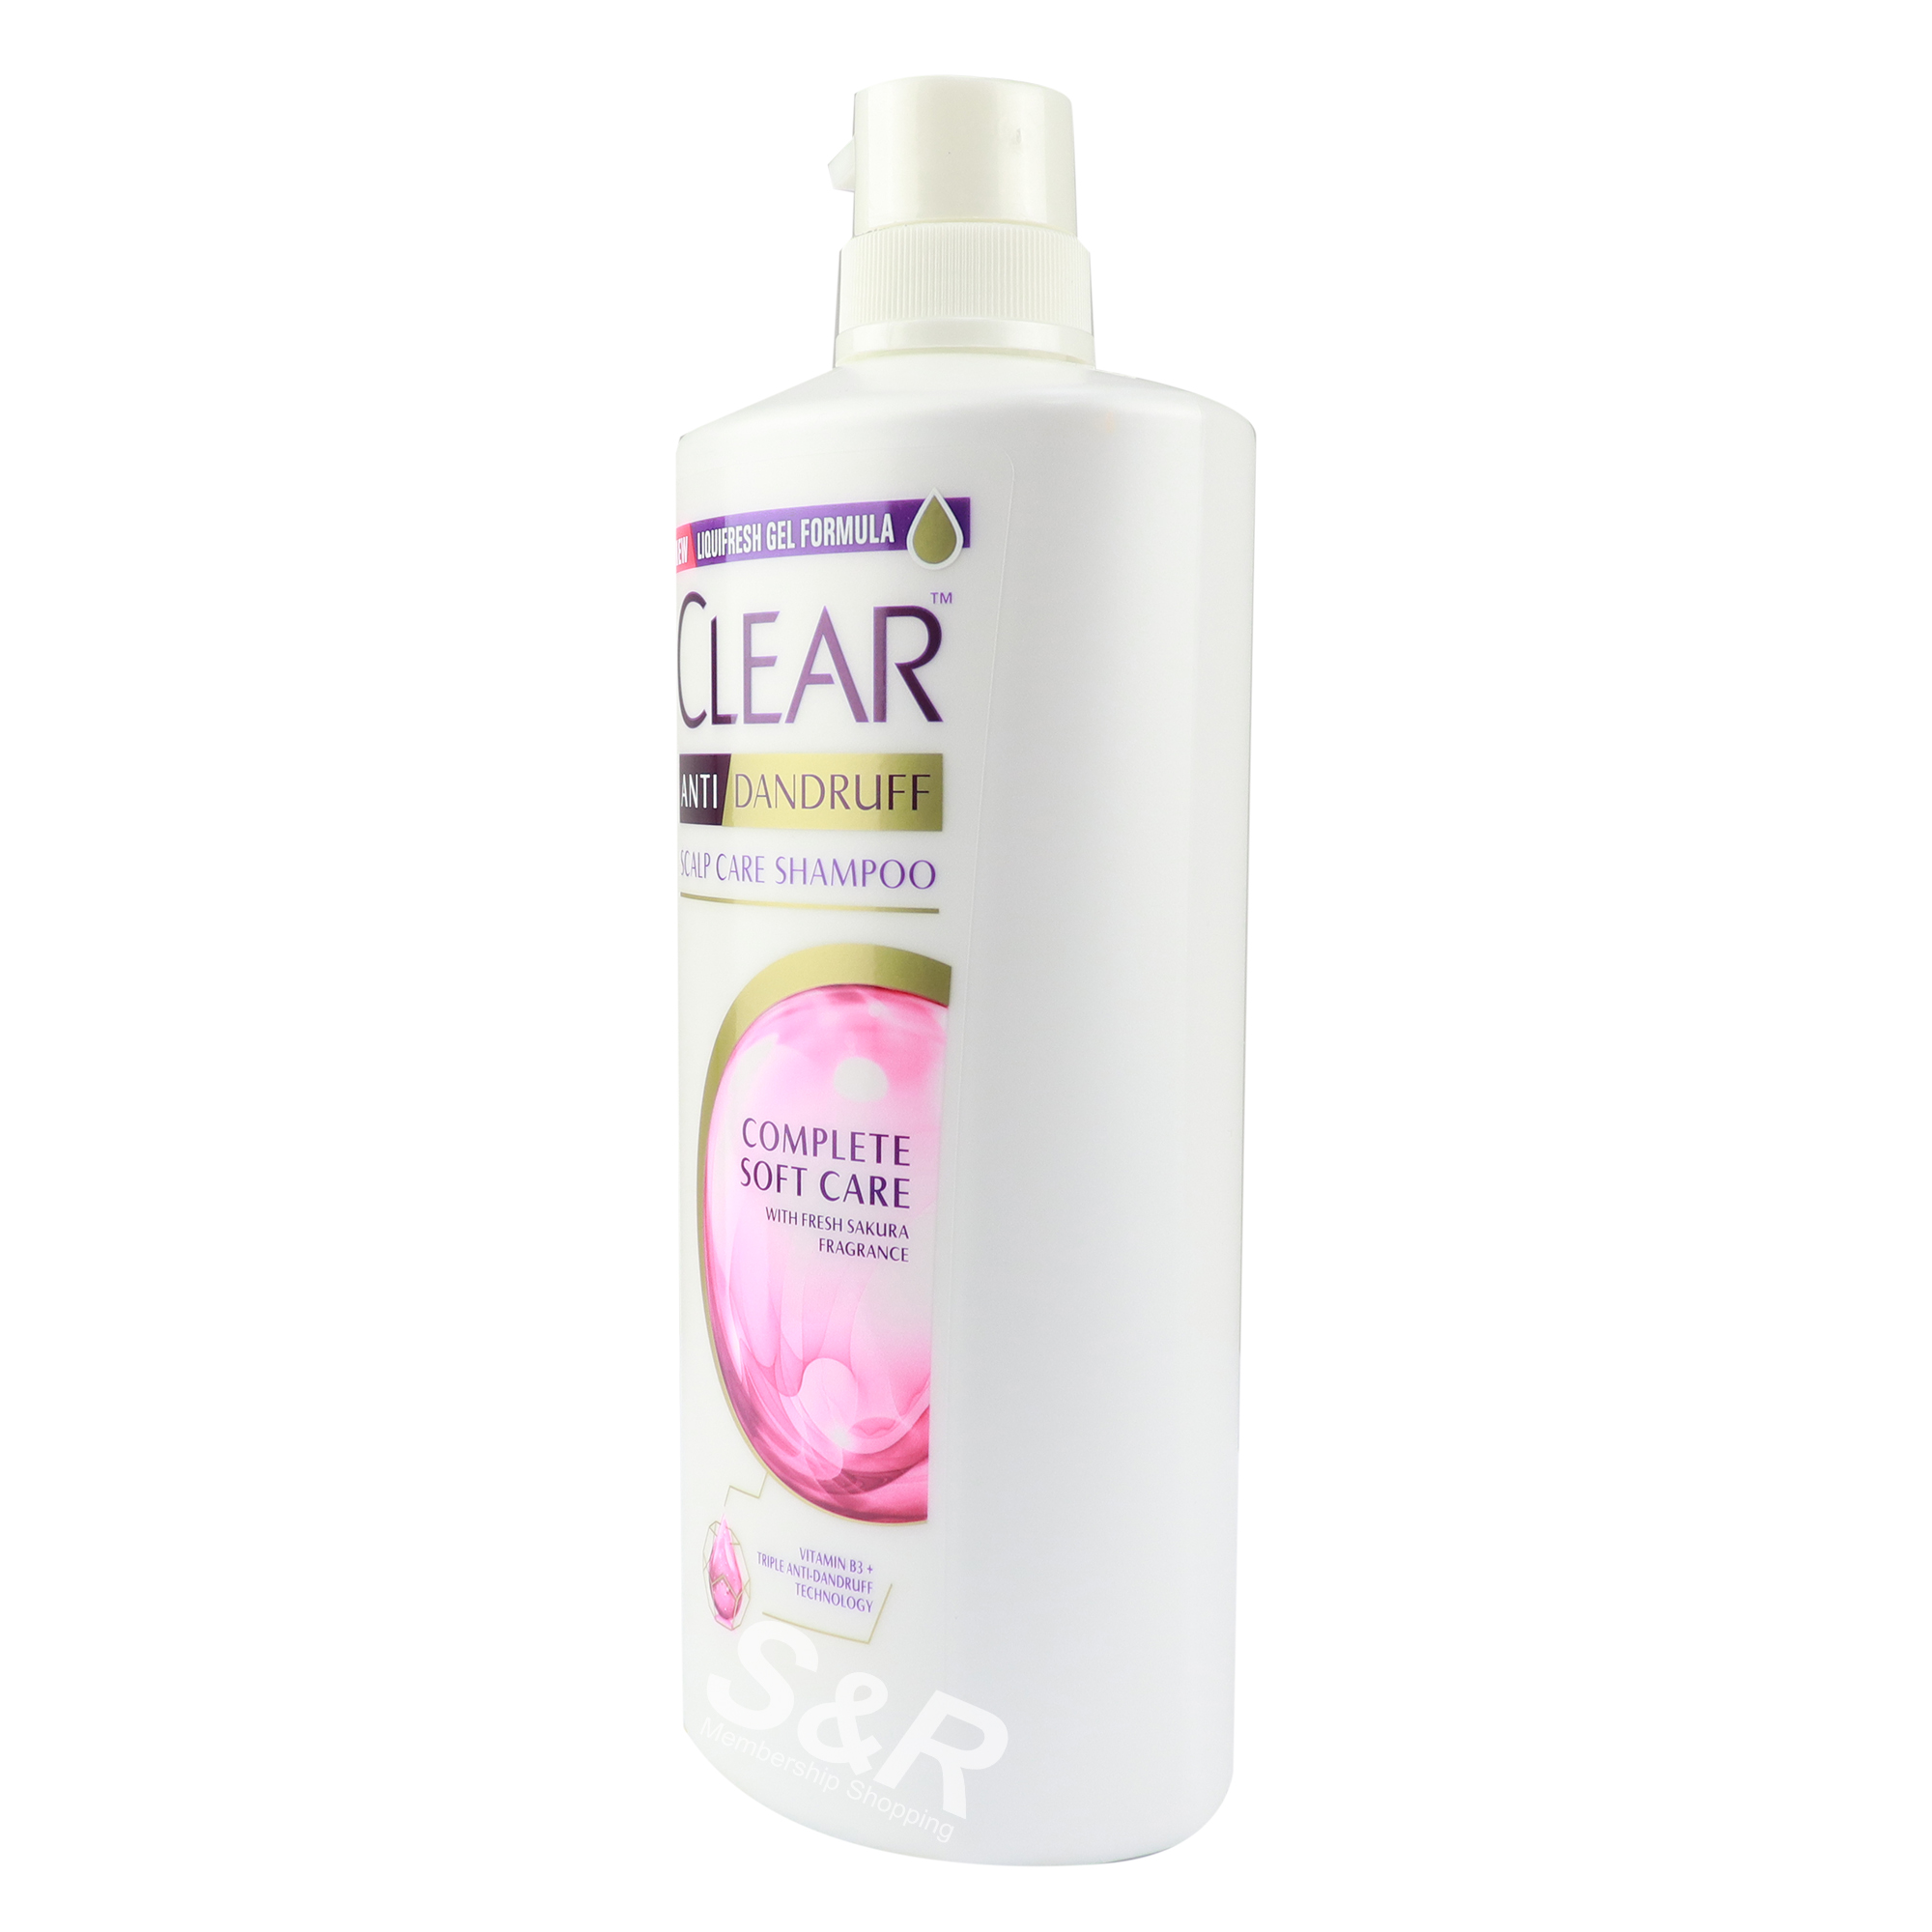 Scalp Care Shampoo